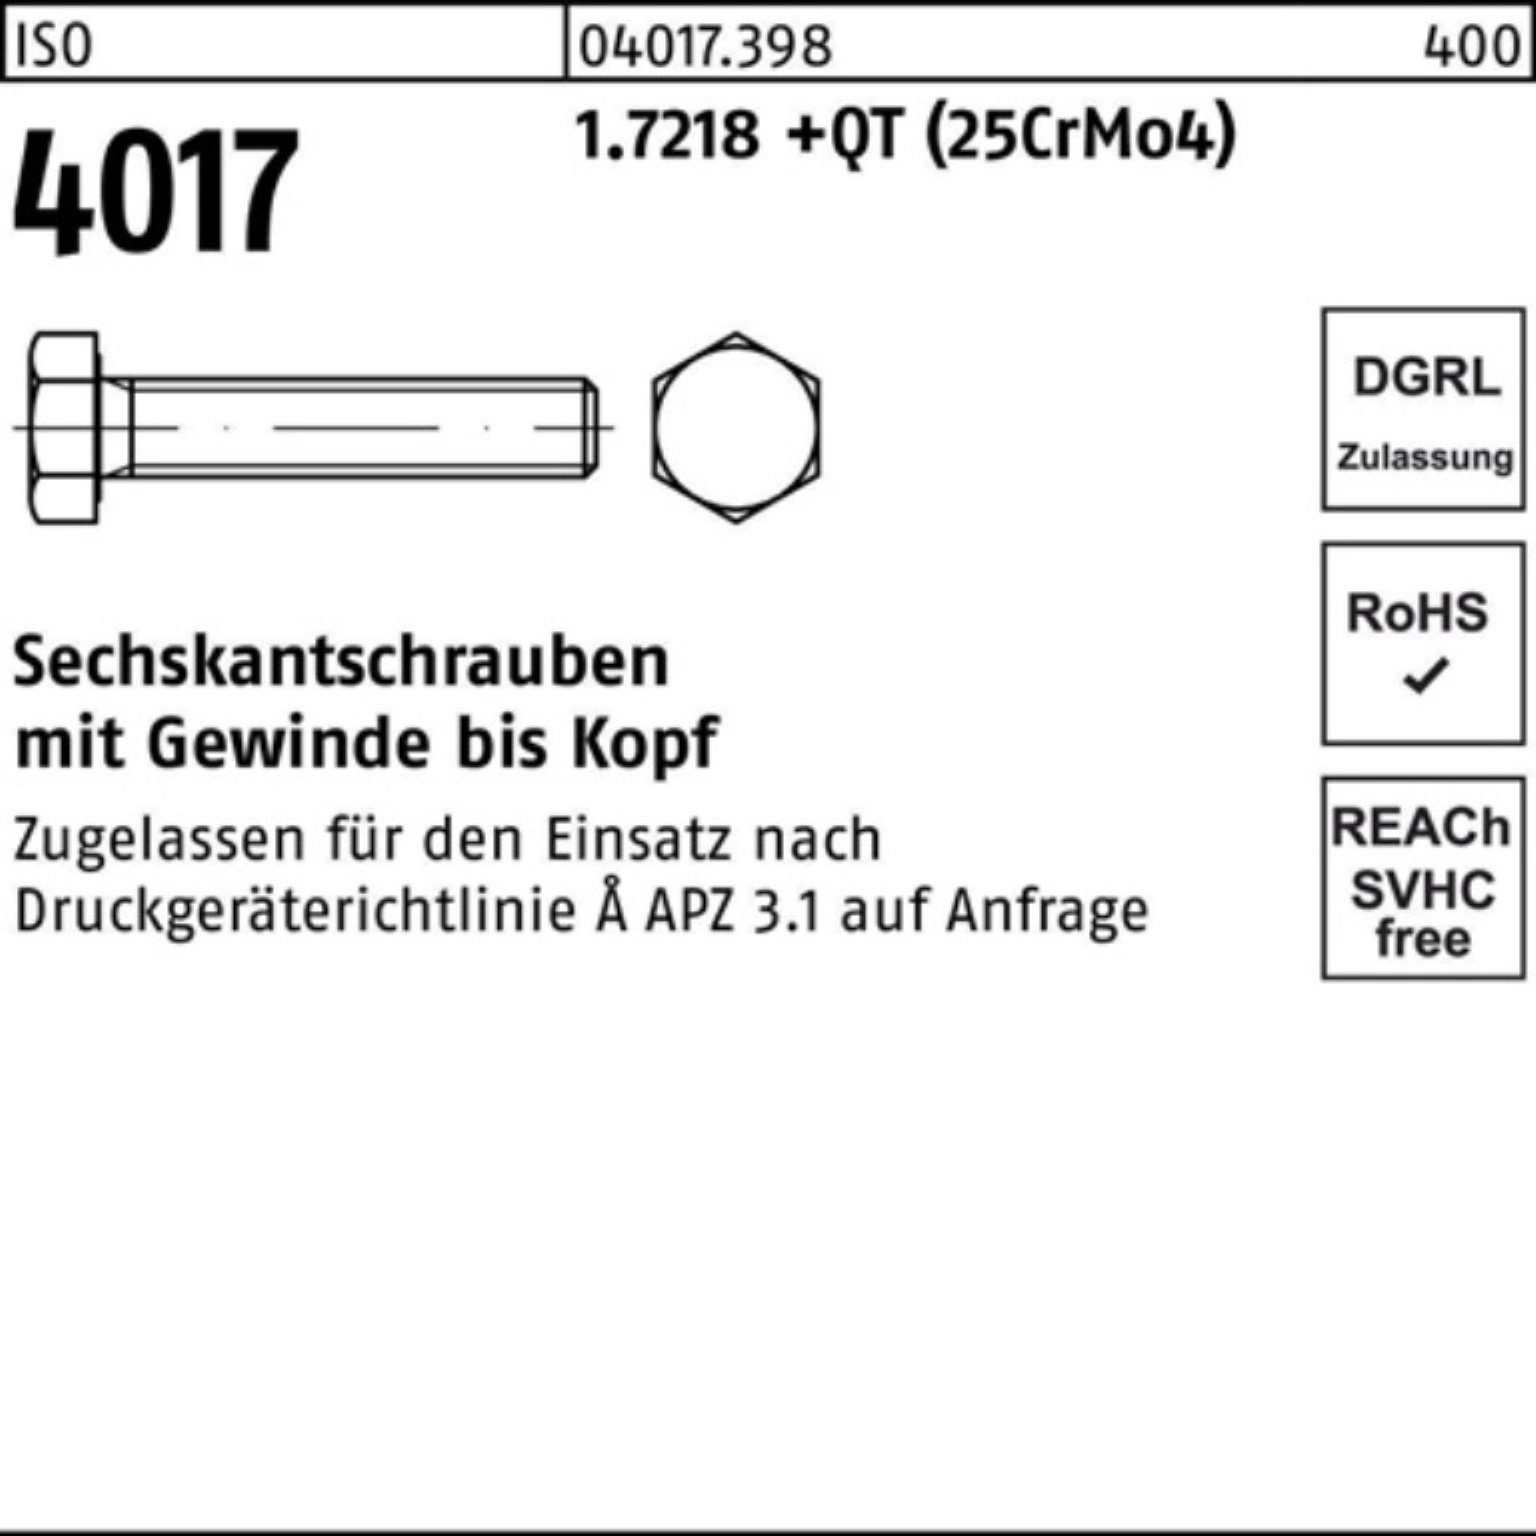 Bufab Sechskantschraube 100er Pack ISO 4017 VG 180 +QT M24x 1.7218 (25CrMo4) Sechskantschraube